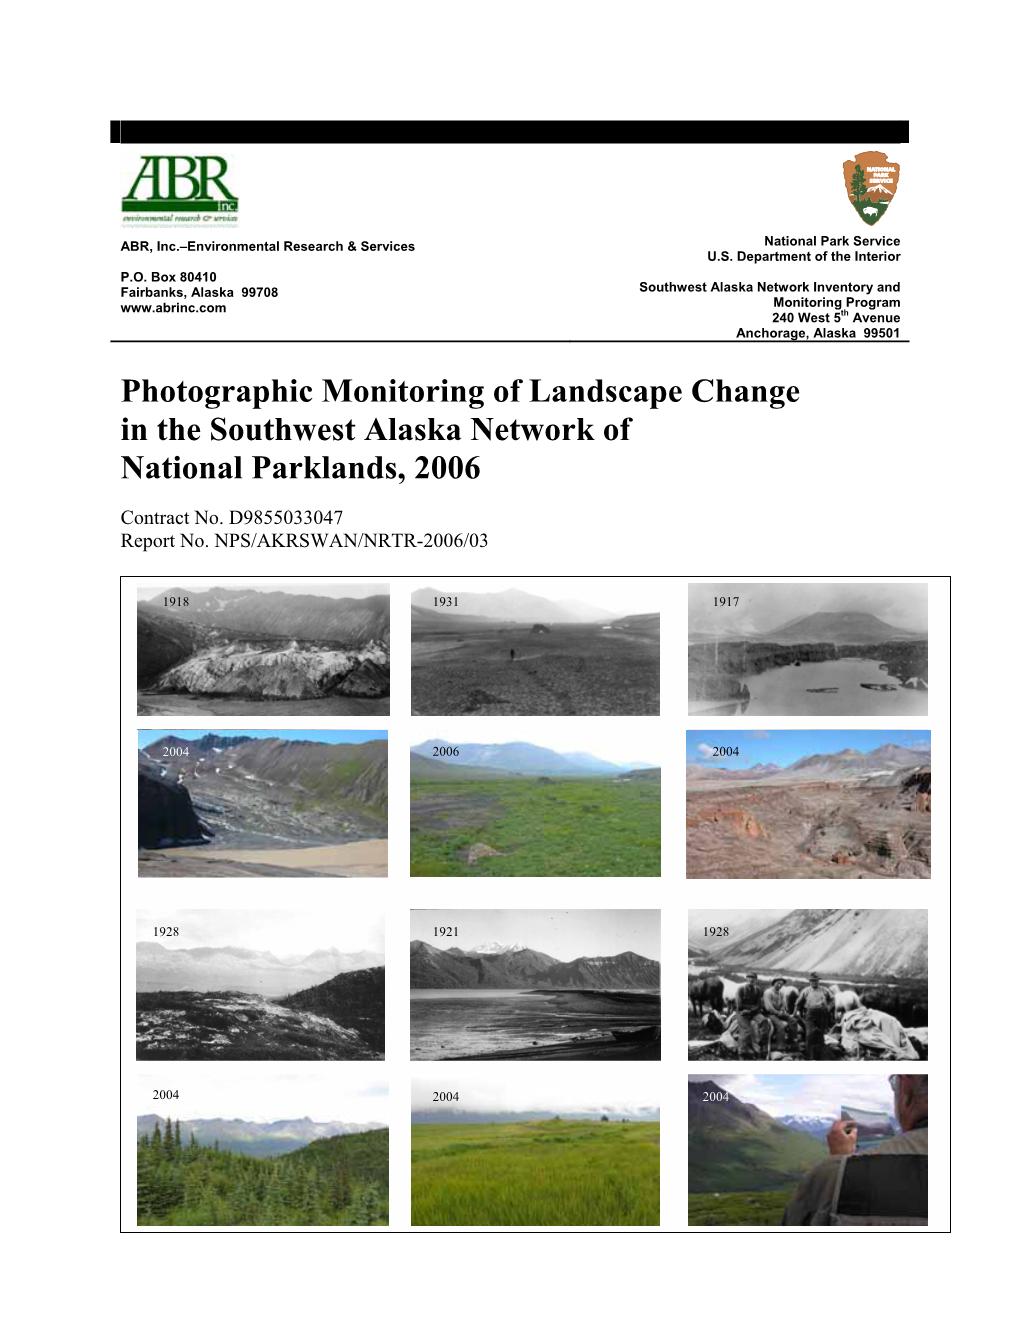 Photographic Monitoring of Landscape Change in the Southwest Alaska Network of National Parklands, 2006